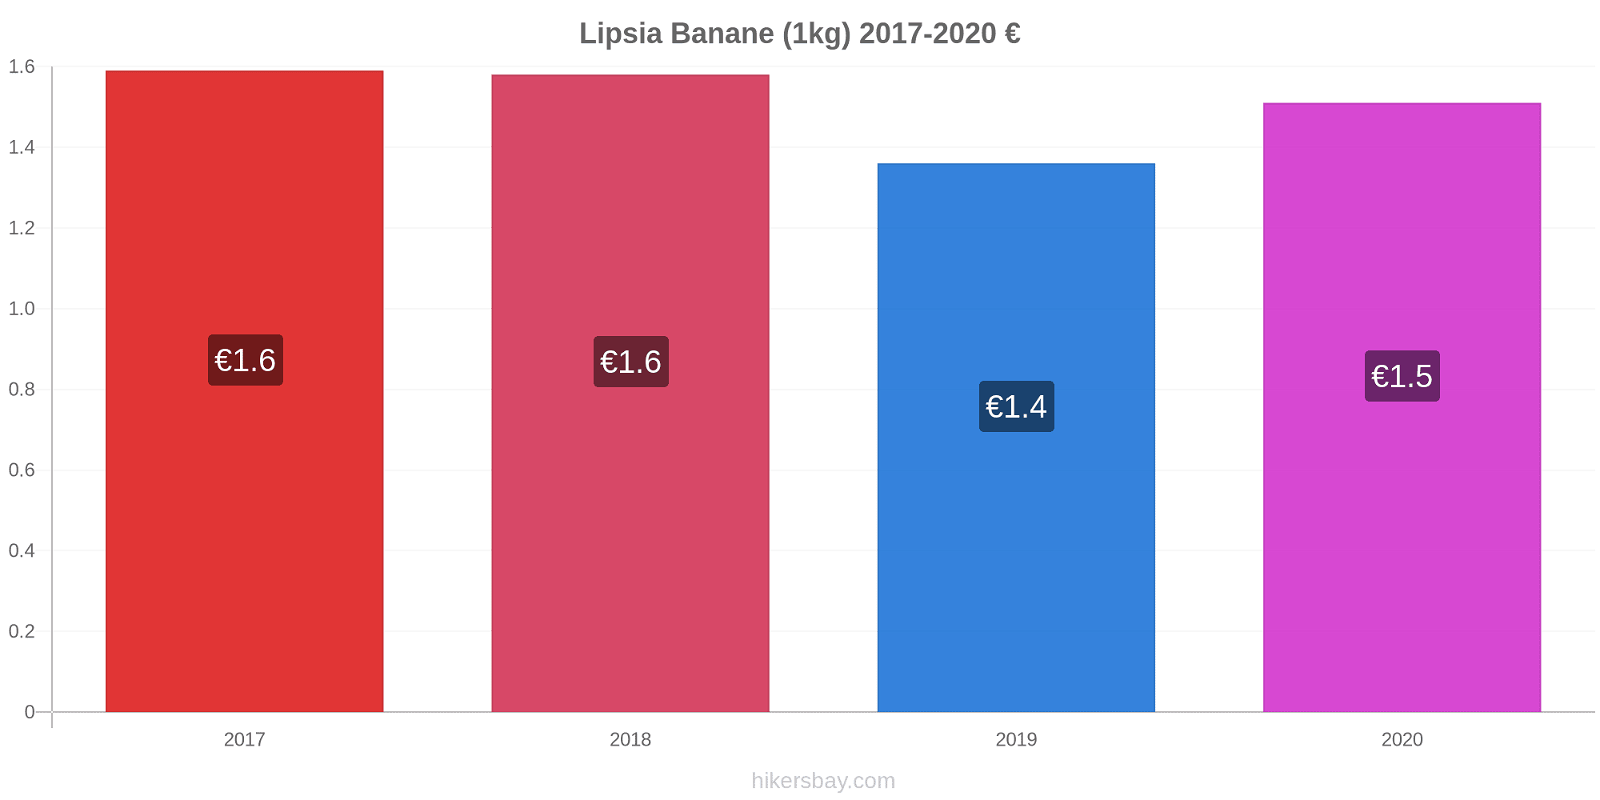 Lipsia variazioni di prezzo Banana (1kg) hikersbay.com